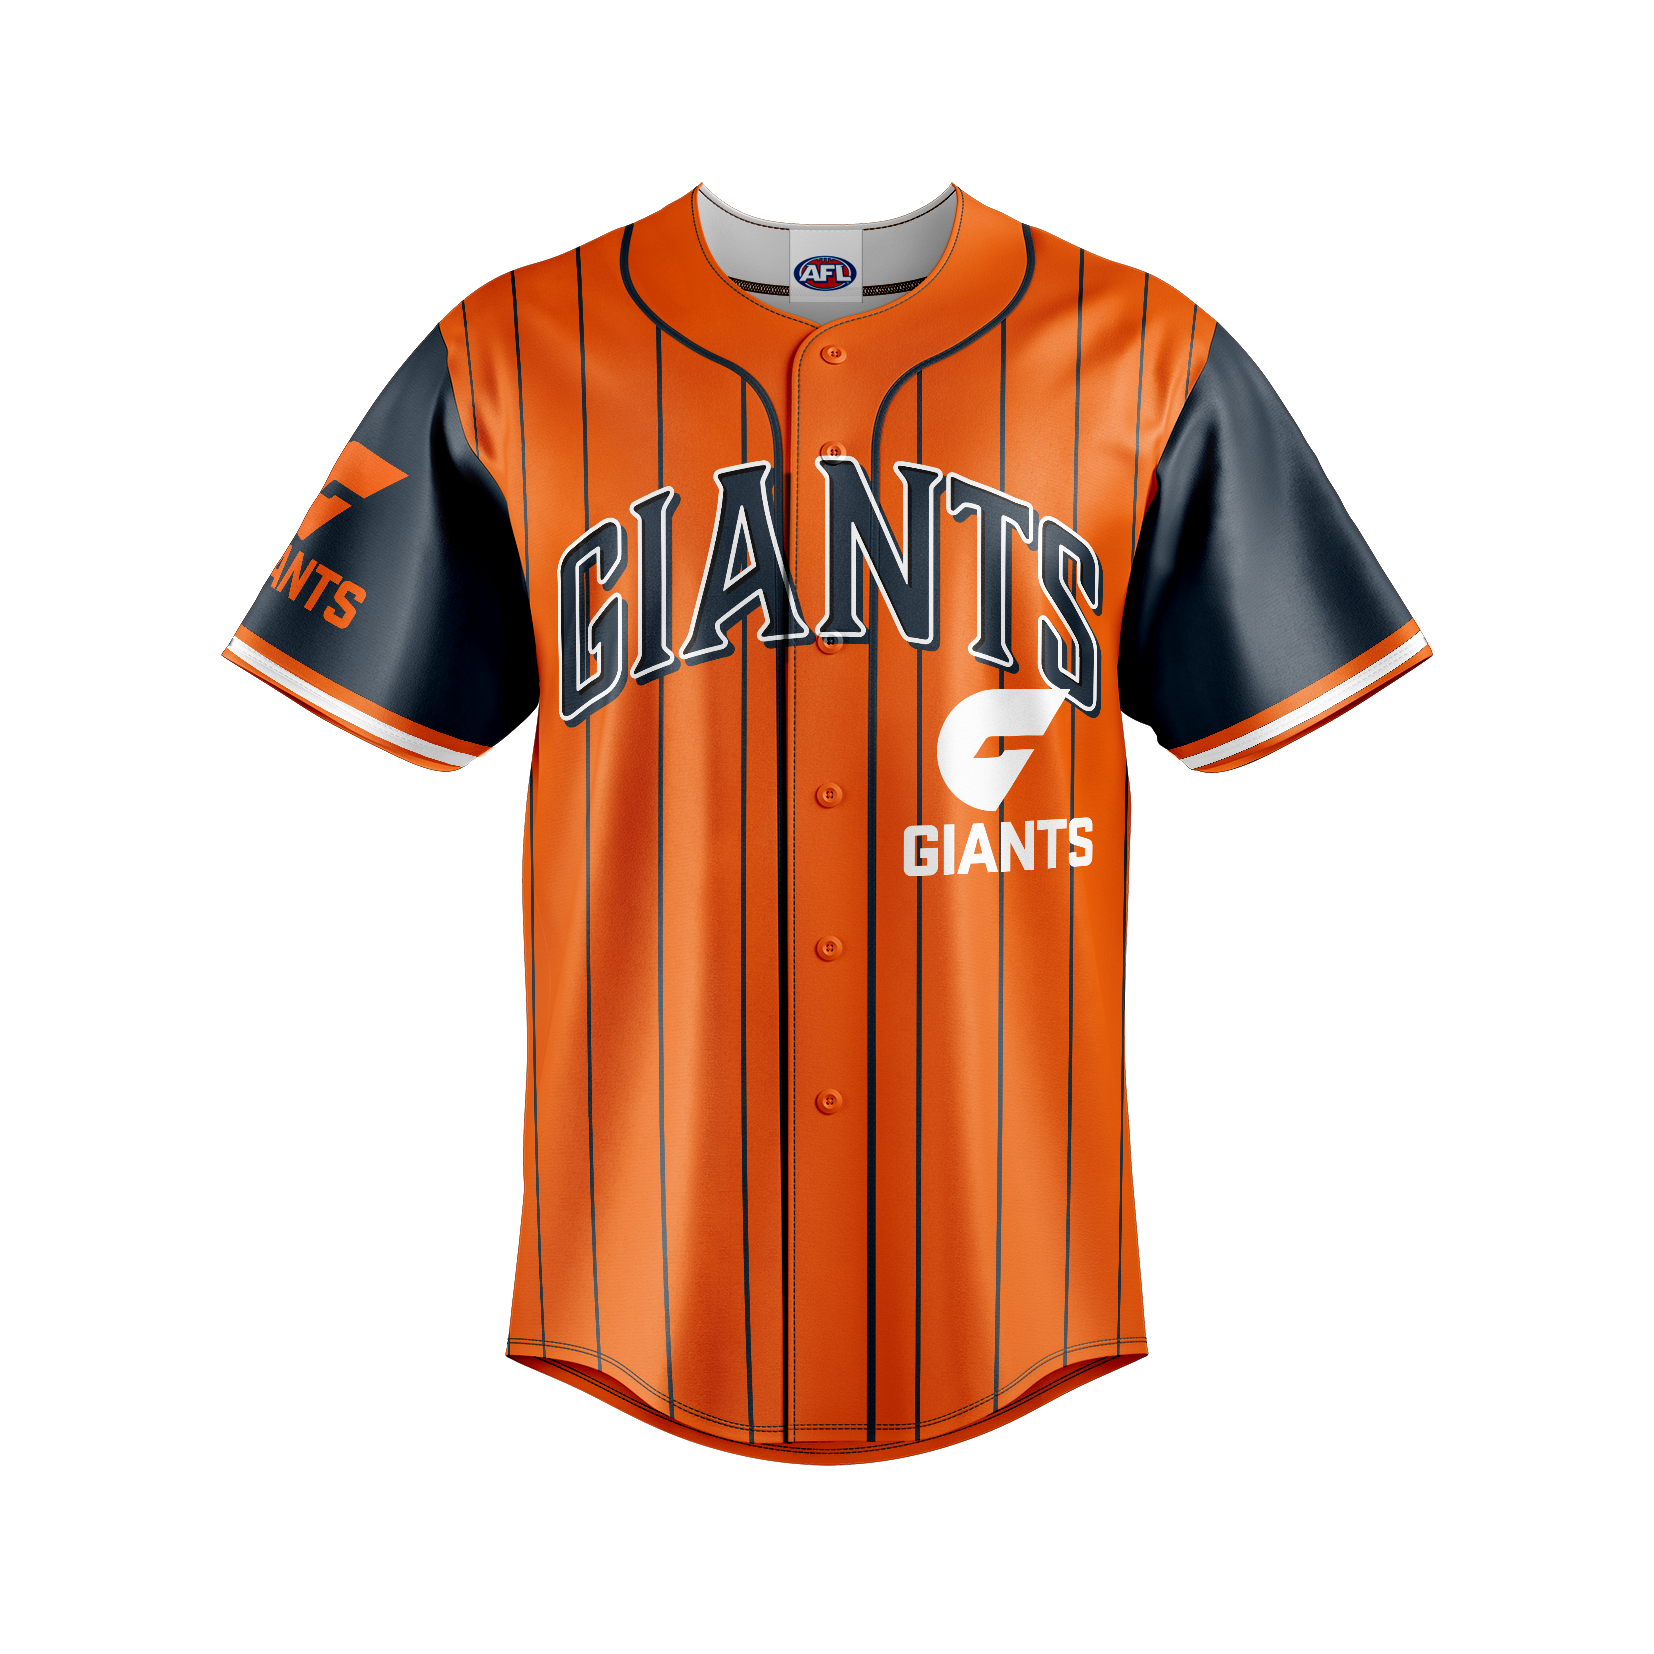 Greater Western Sydney Giants "Slugger" Baseball Shirt